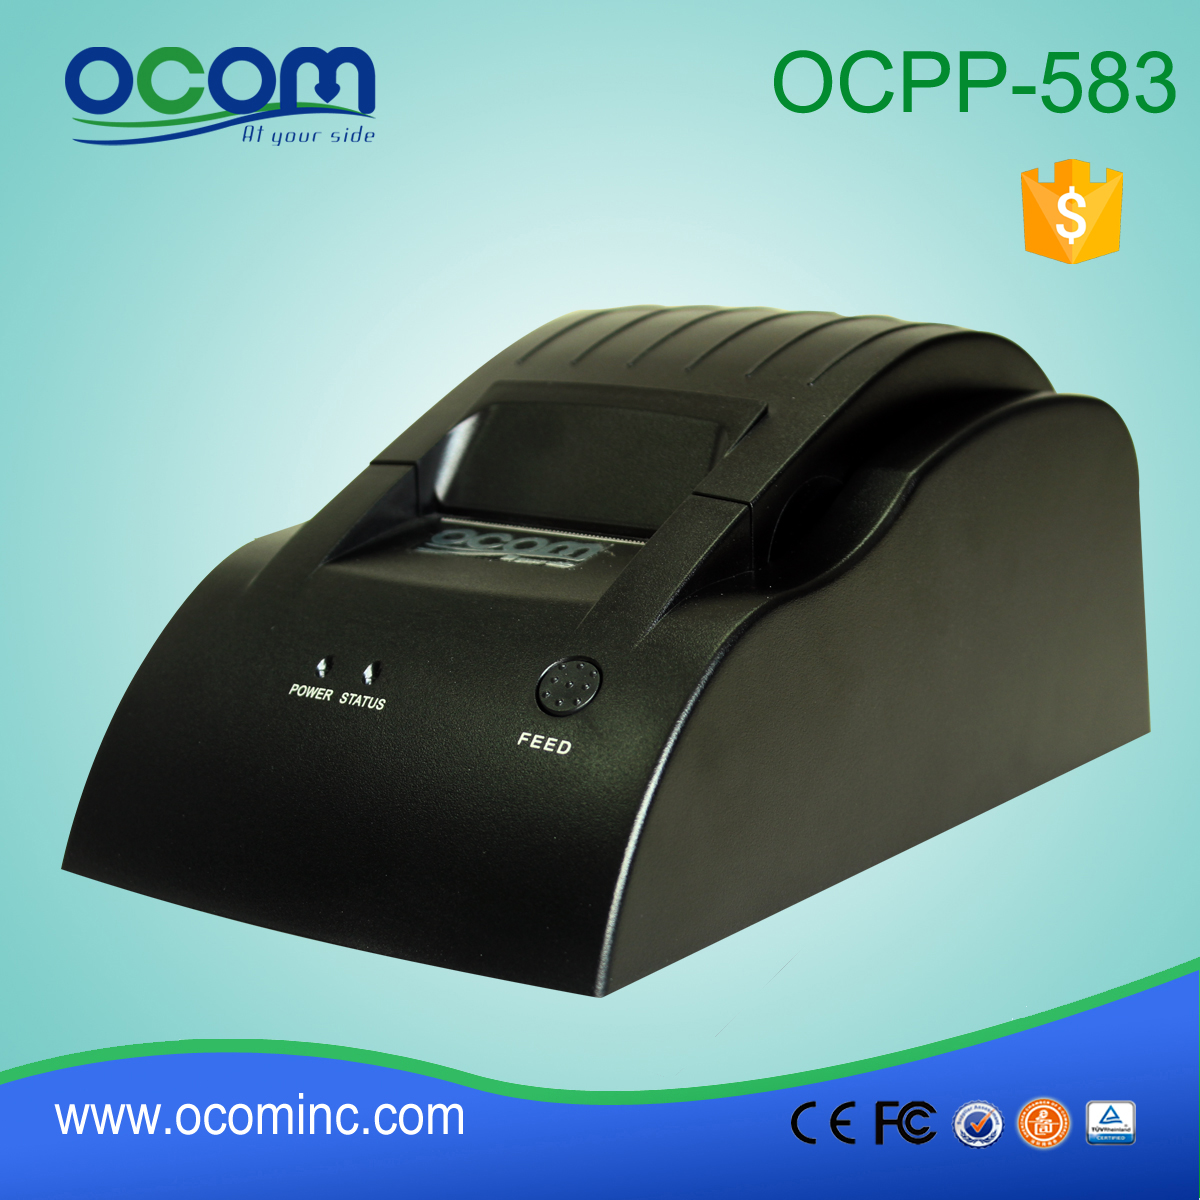 OCPP-583-R 58mm POS Thermal Ticket Receipt Printer RS232 Port